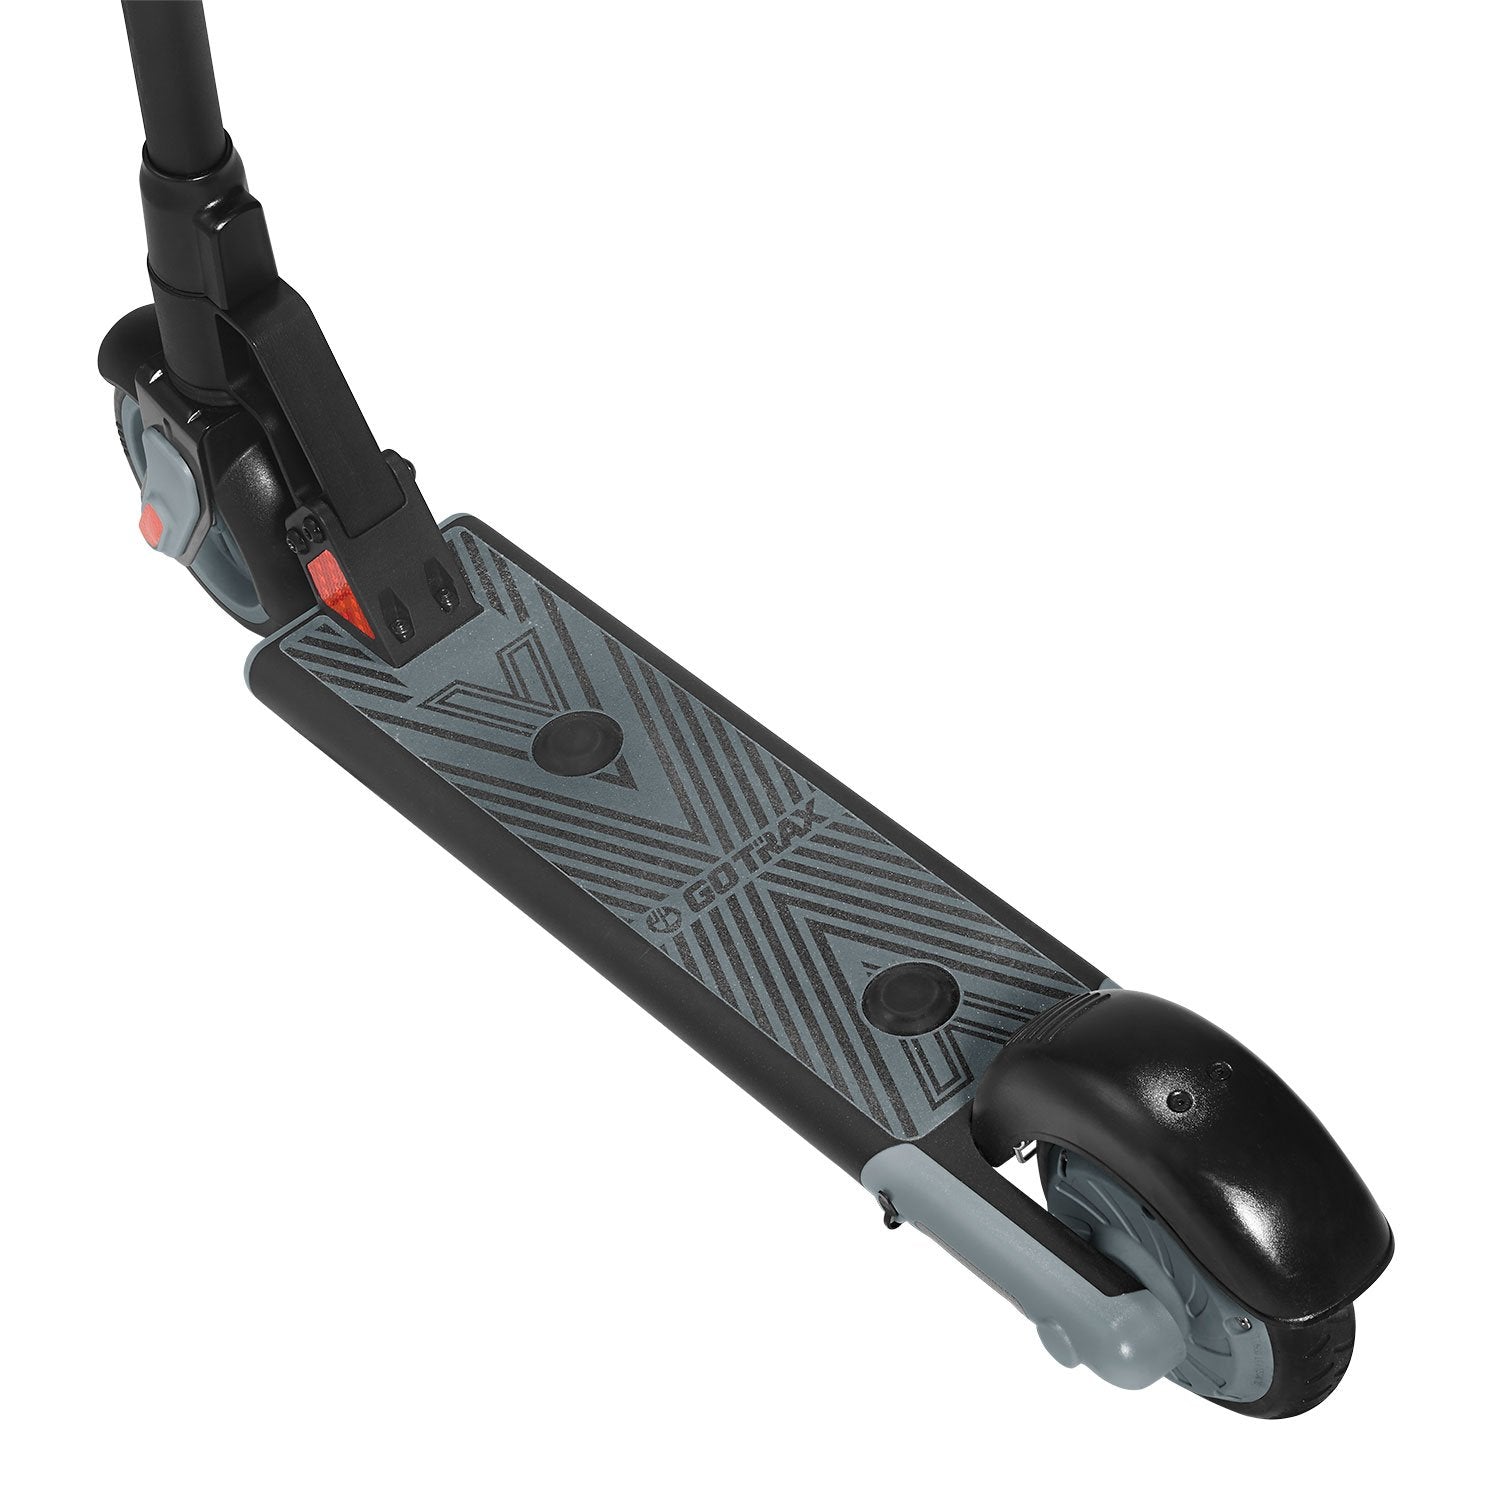 Black gks electric scooter for kids deck image